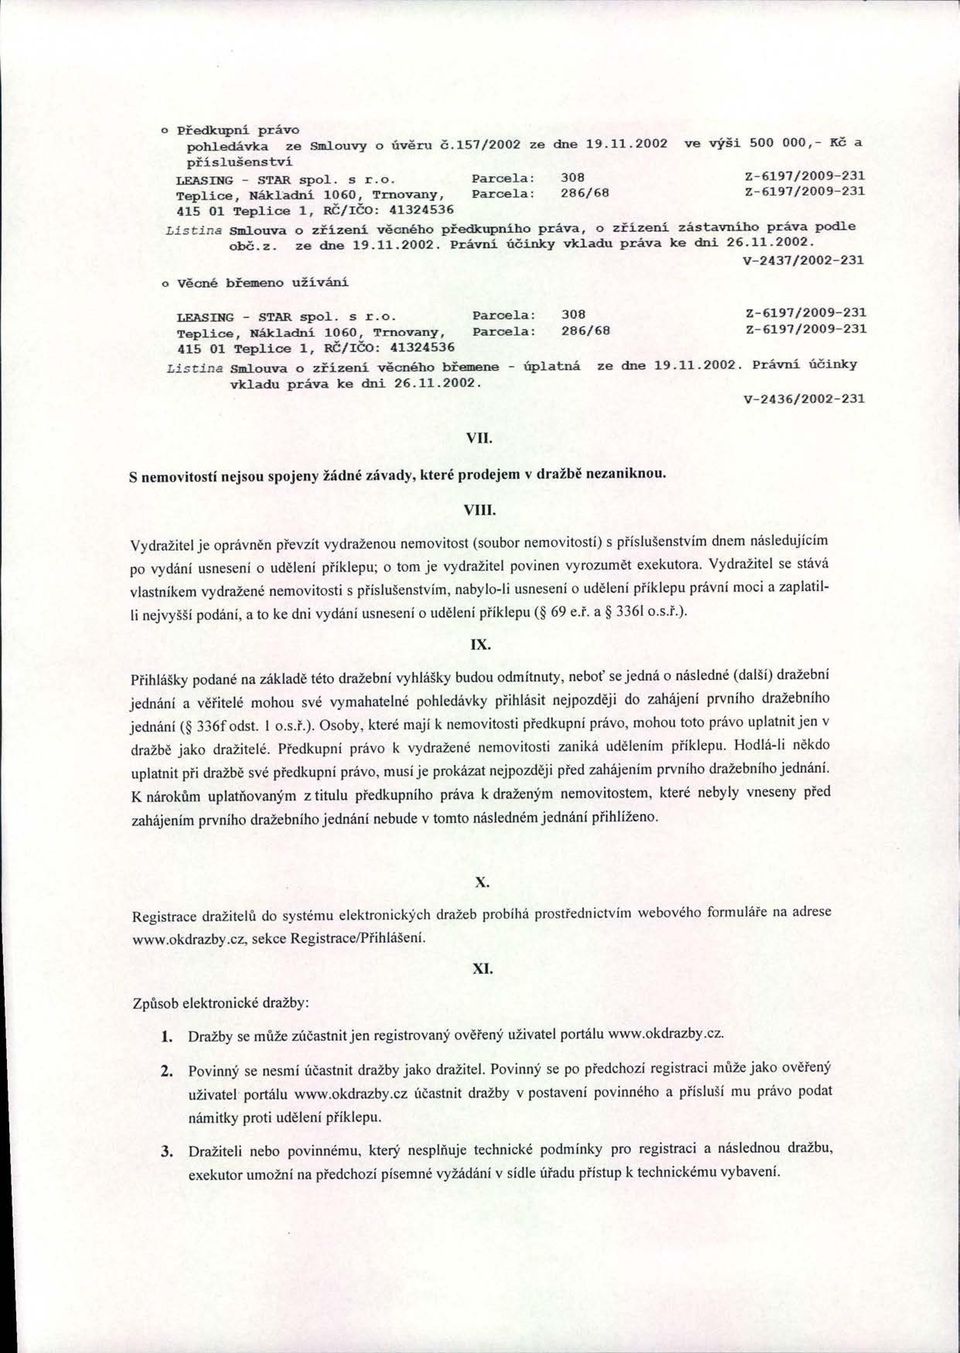 Právní ú činky vkladu práva ke dni 26.11.2002. v-2437/2002--231 o 